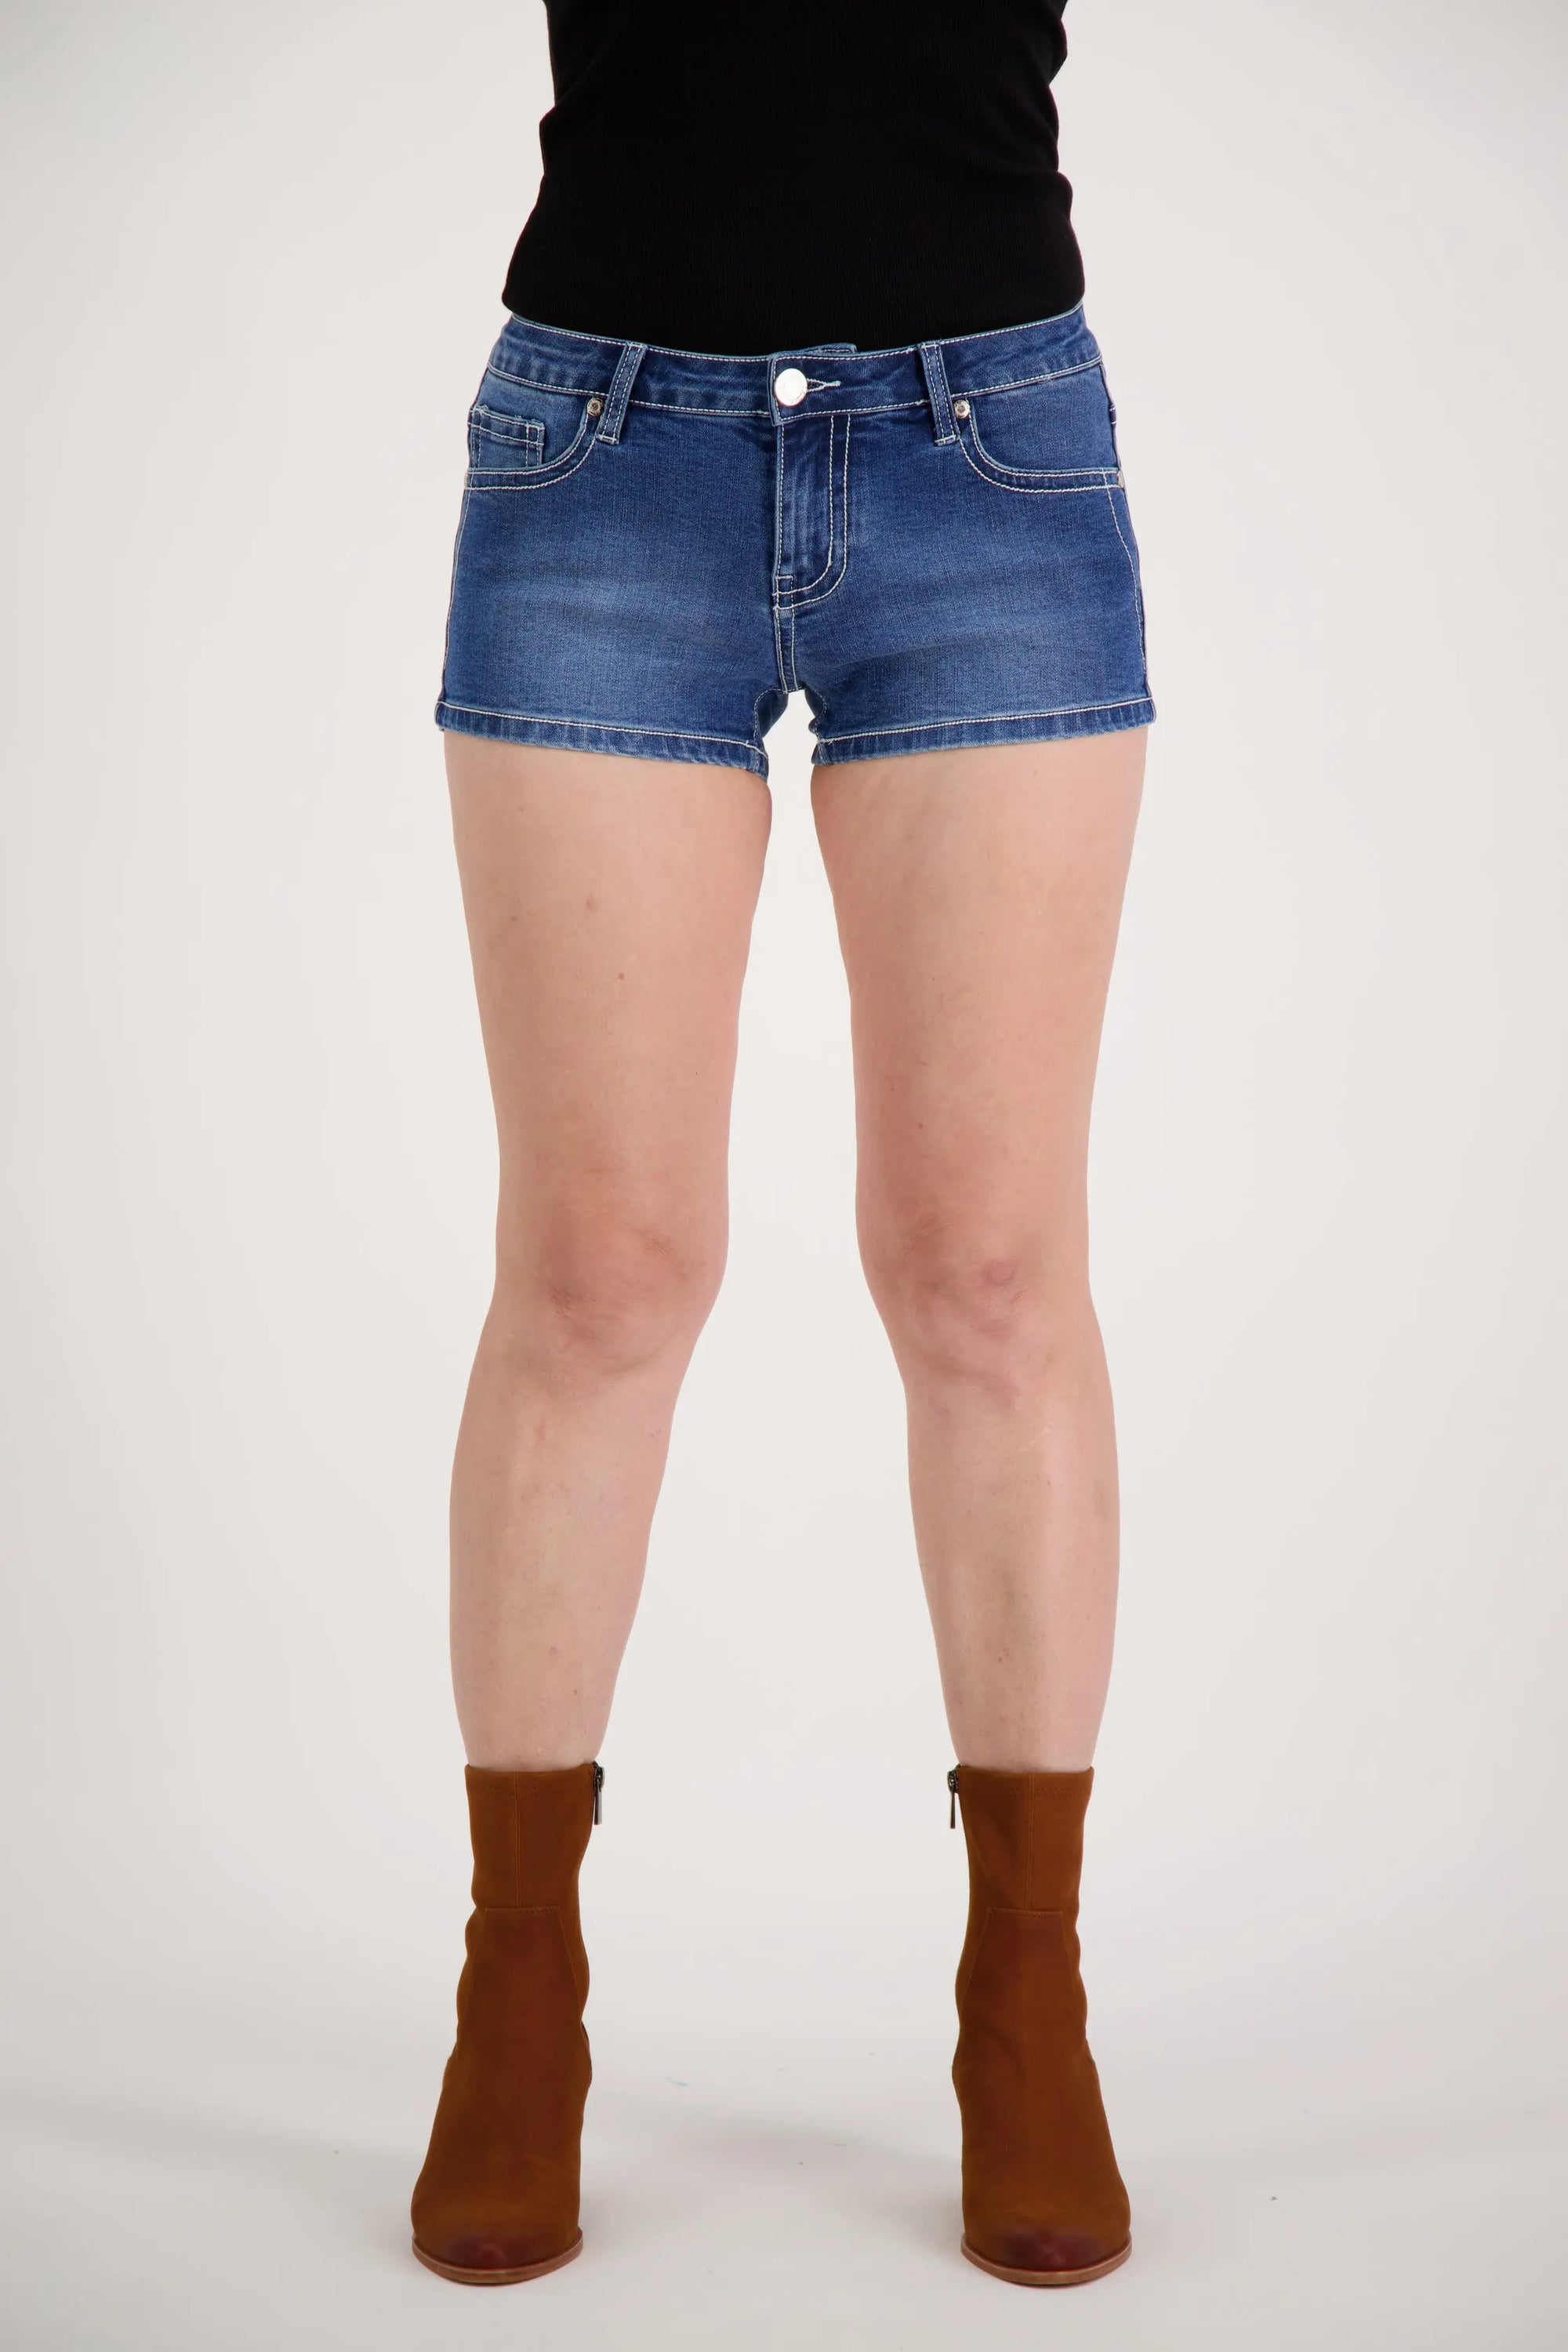 Stella Bling Denim Shorts Outback Supply Co